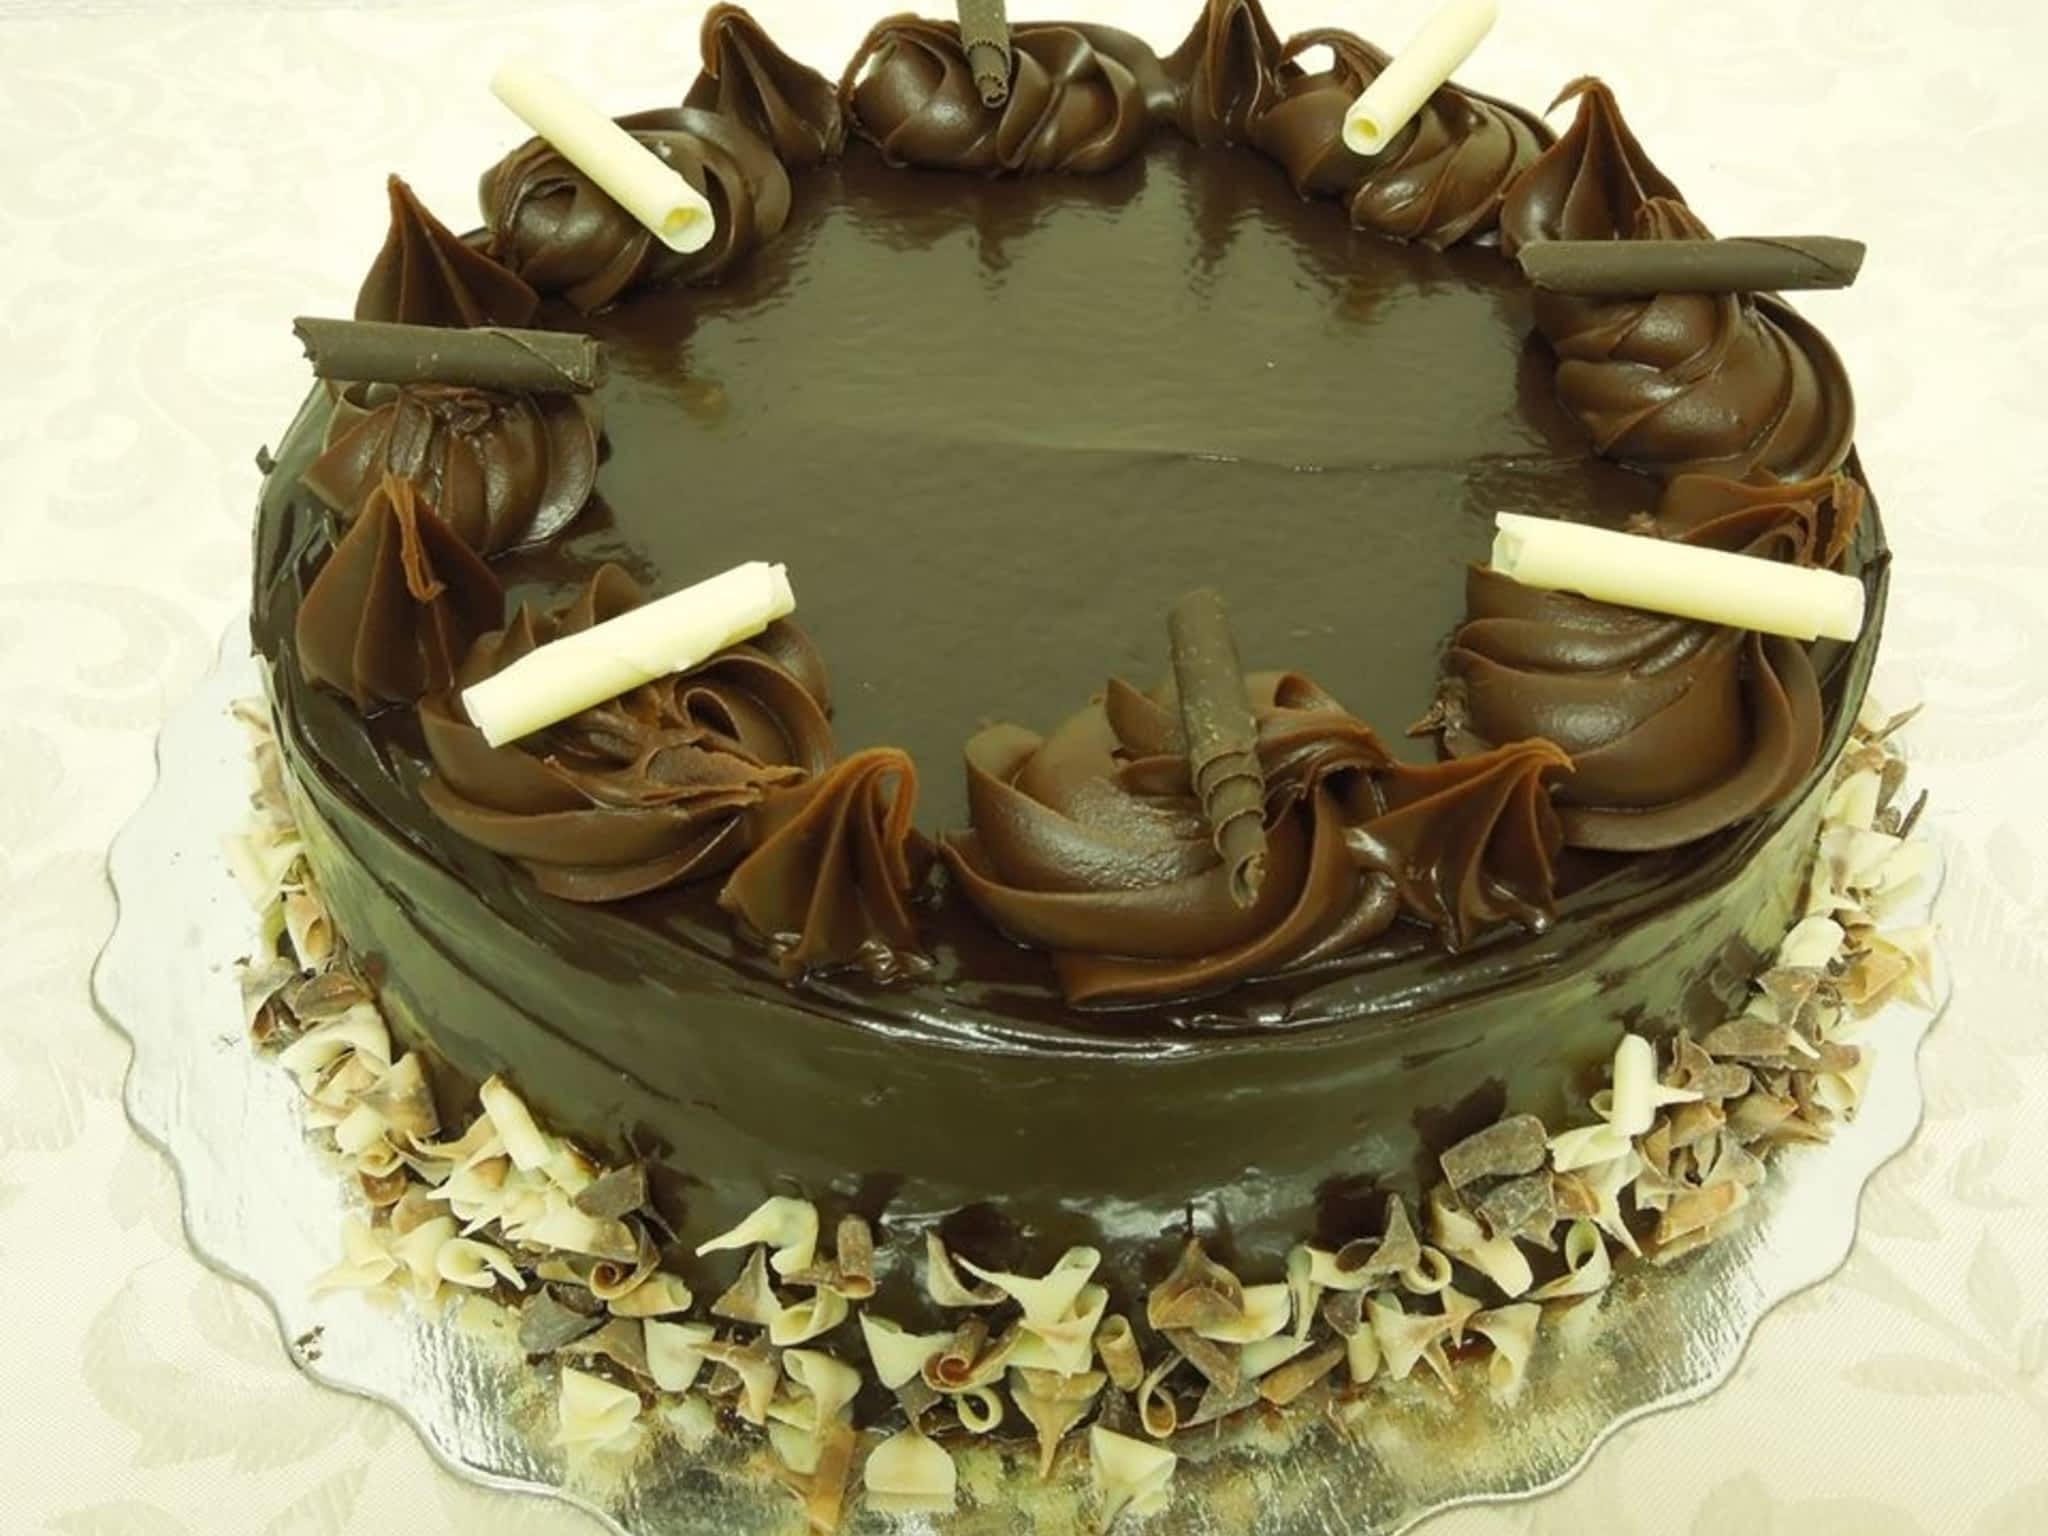 photo Armeen's Cake & Bake Shop